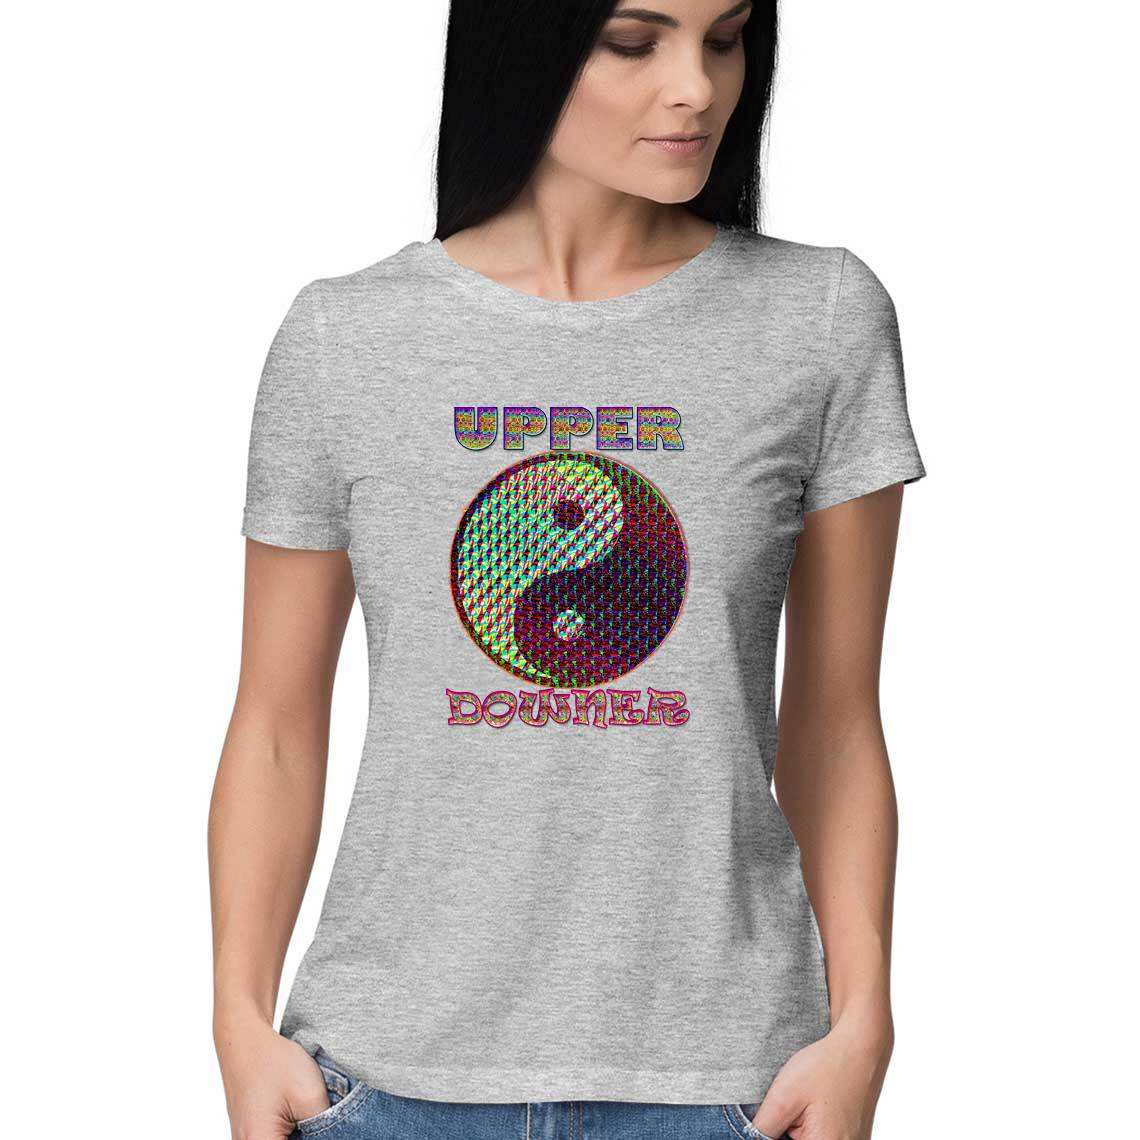 Cosmic Duality Women's T-Shirt - CBD Store India